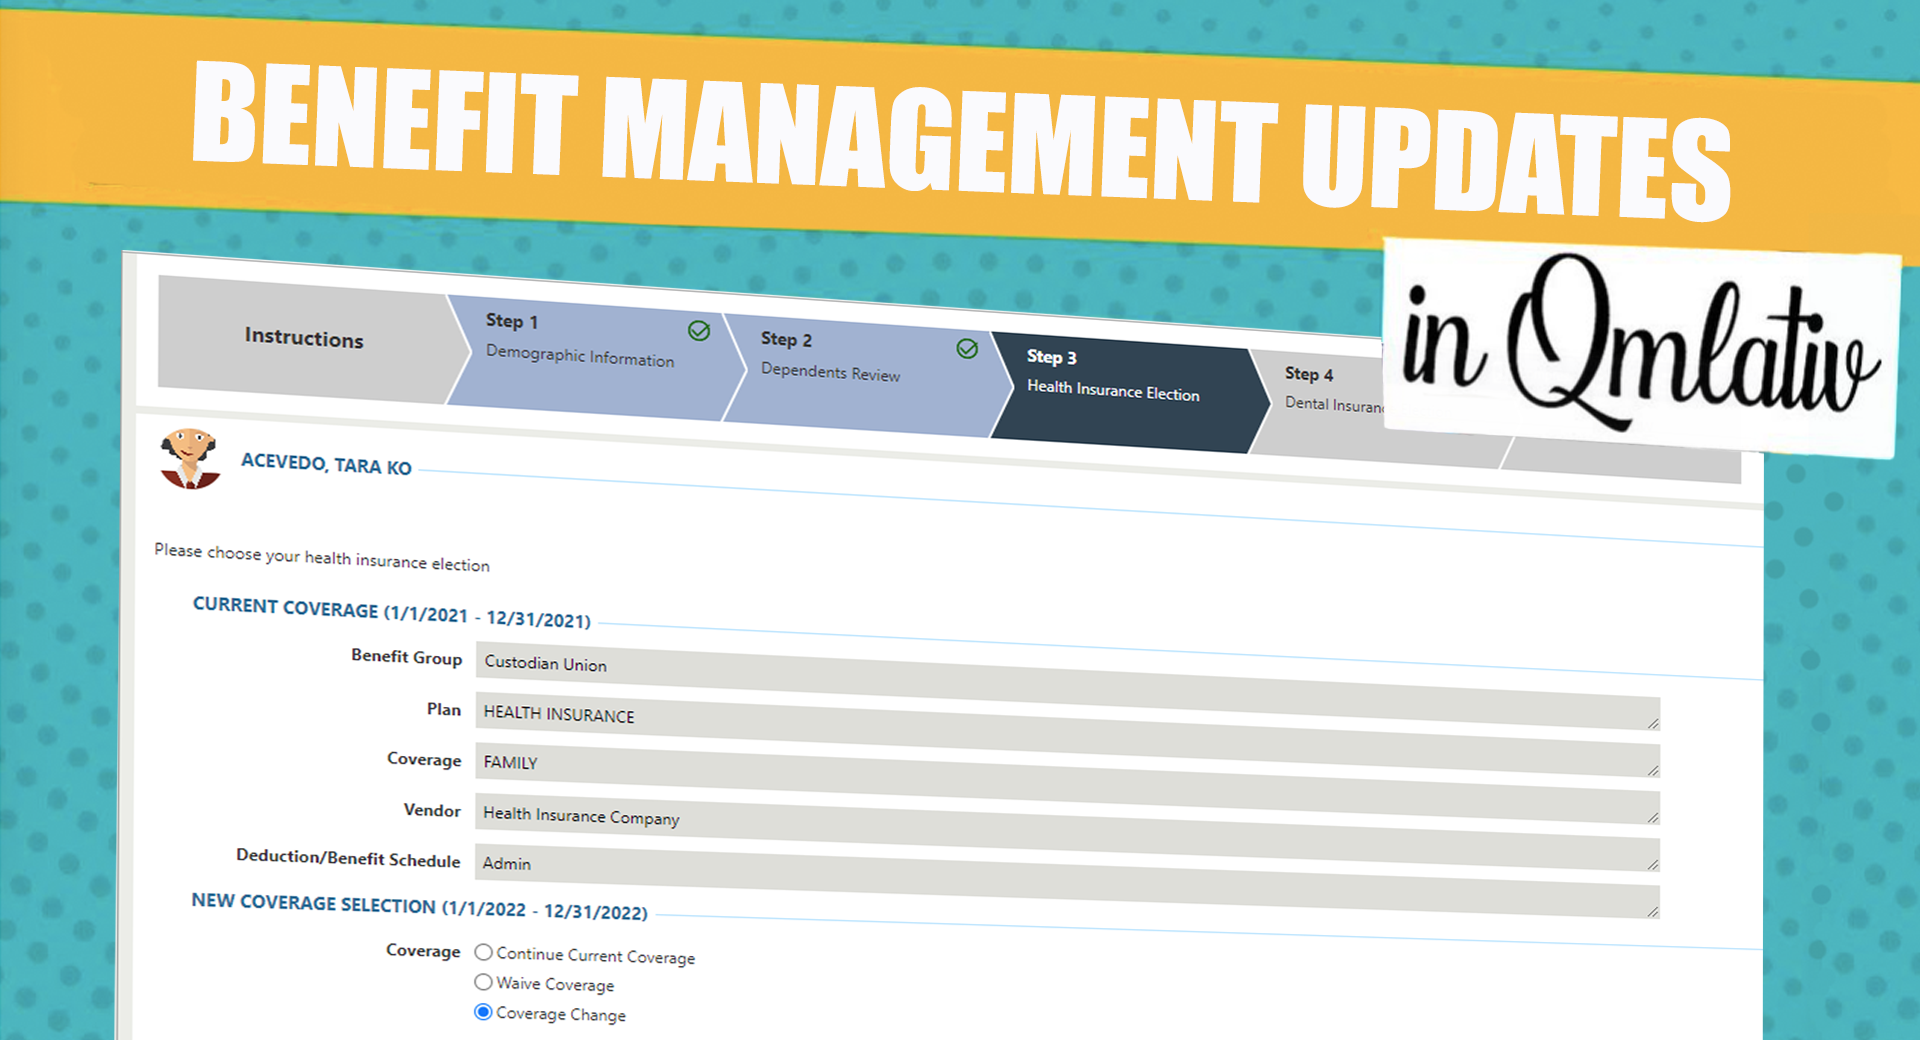 Qmlativ Updates: Benefit Management